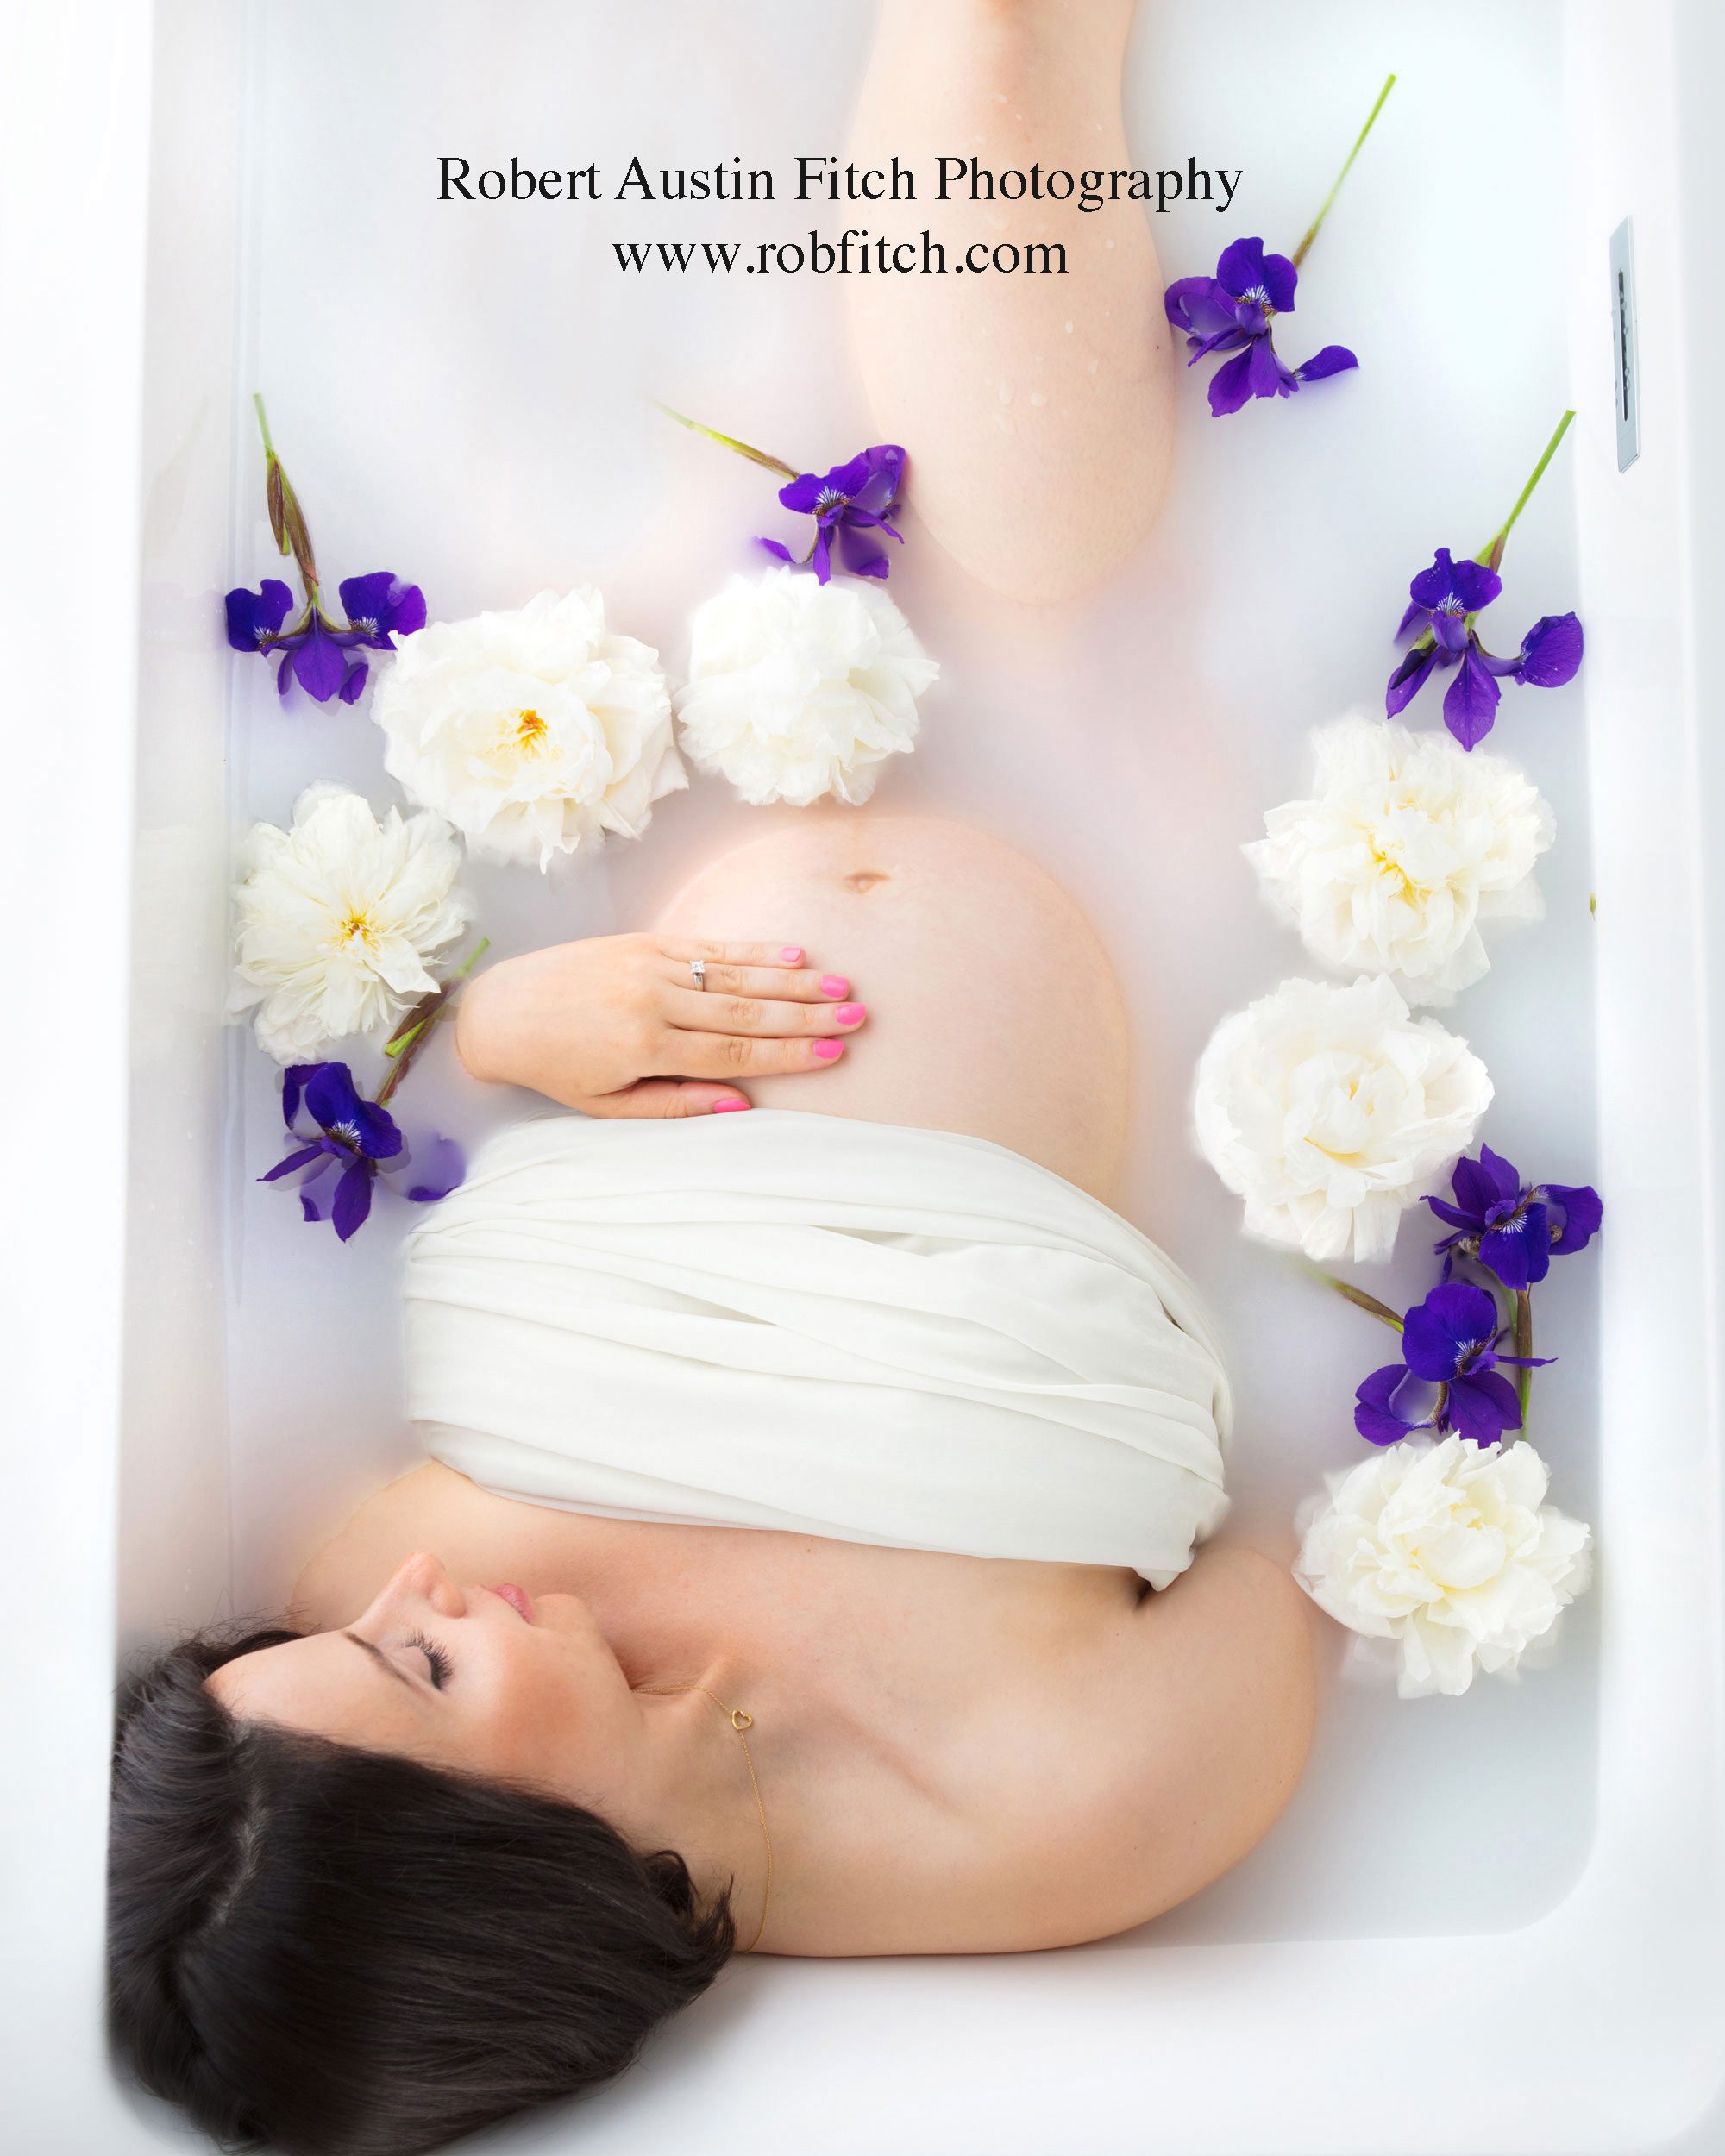 Beautiful milk bath maternity photo with irises and peonies